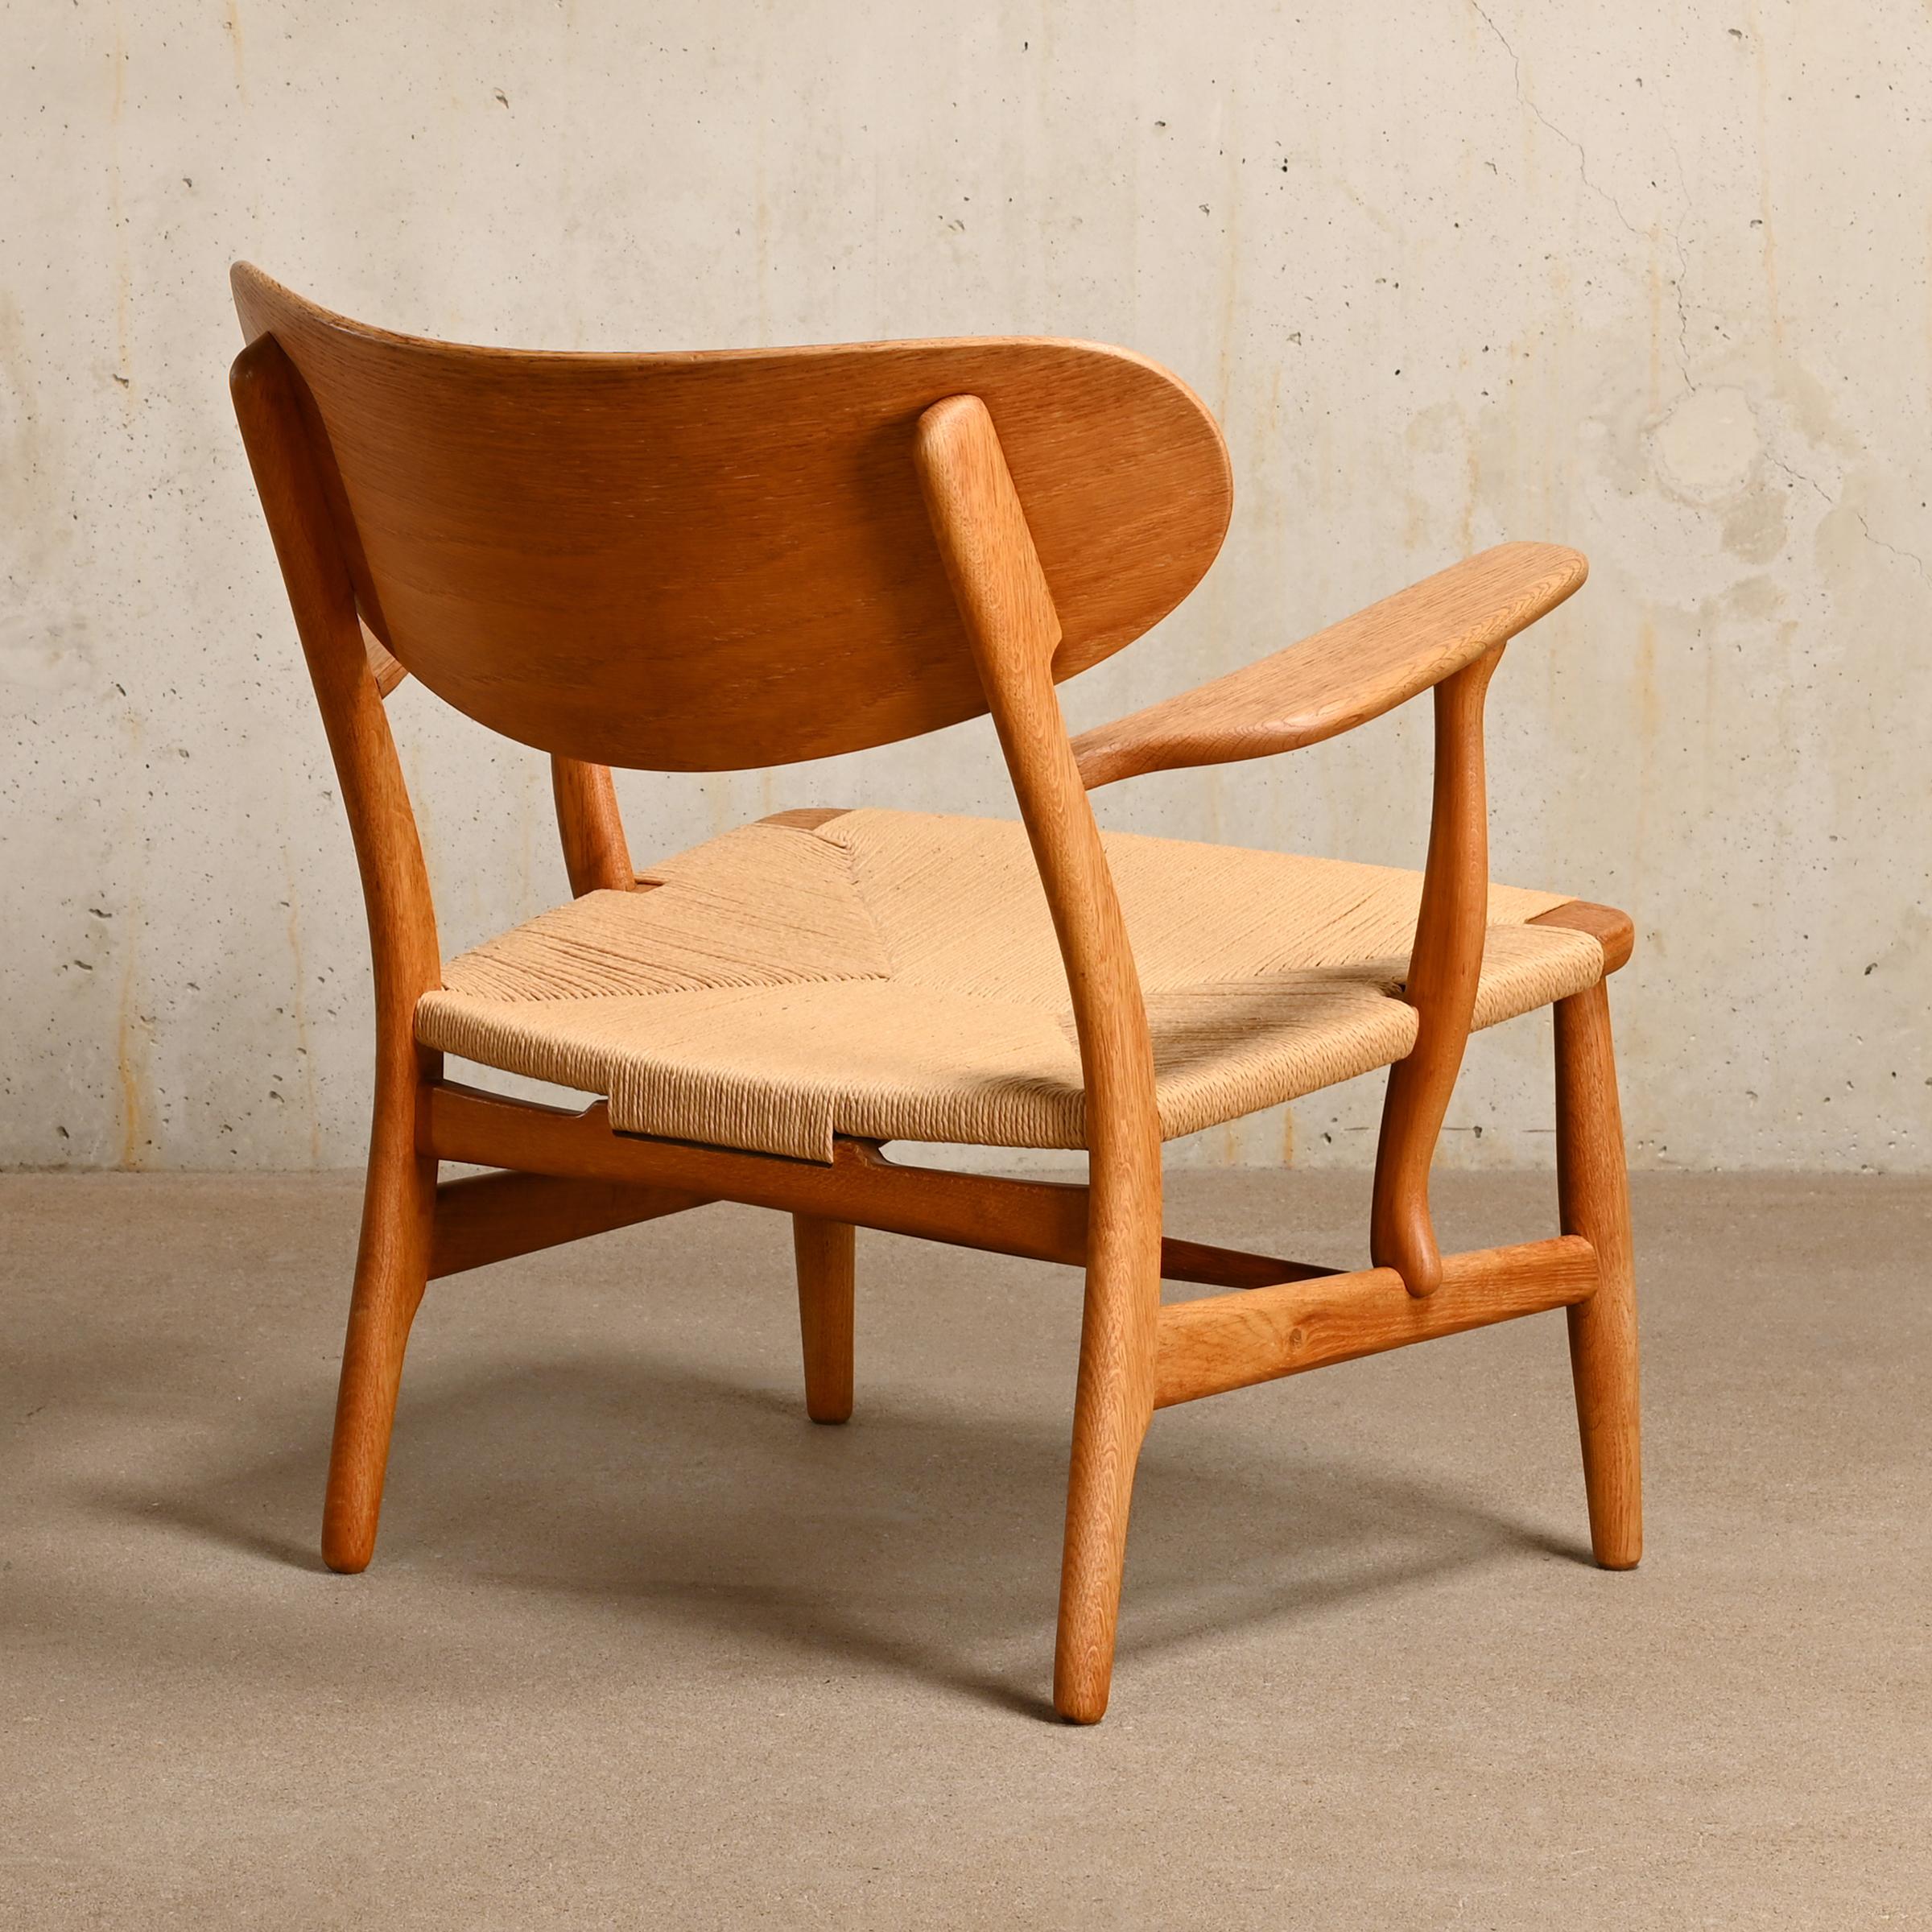 Scandinavian Modern Early Hans J. Wegner CH22 Easy Chair in Oak and Paper-Cord for Carl Hansen & Son